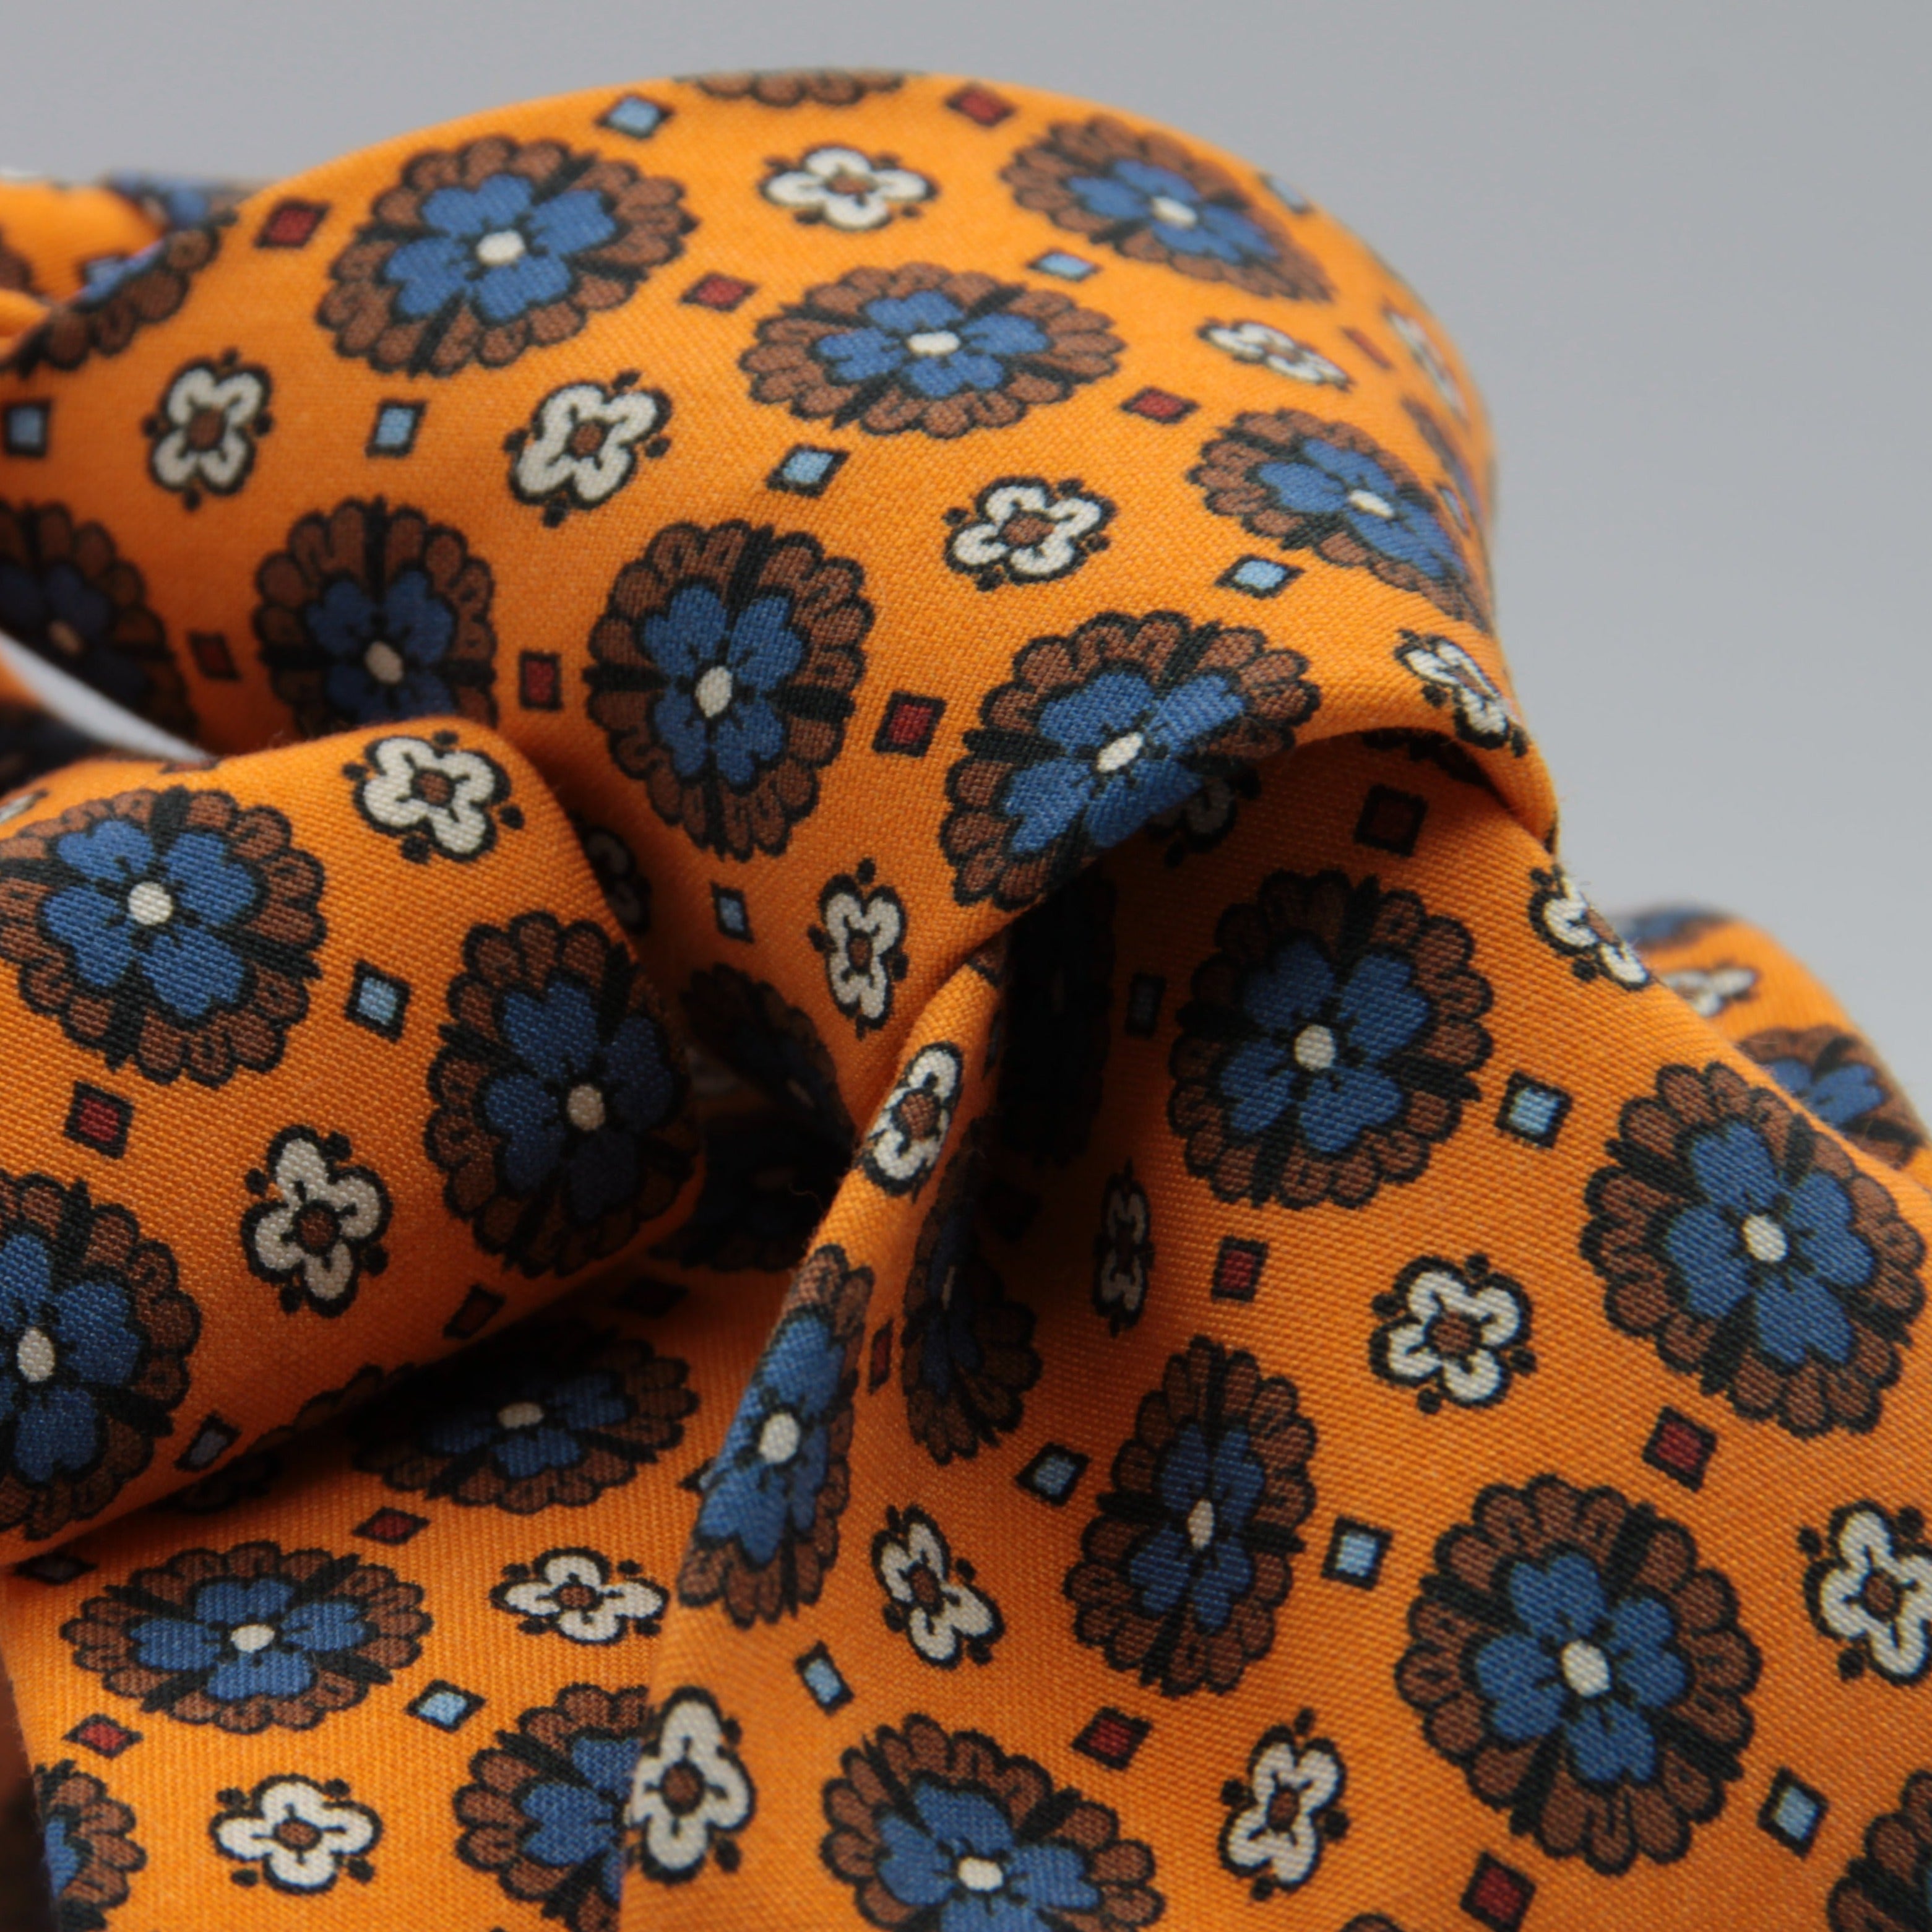 Cruciani & Bella 100% Printed Madder Silk  Italian fabric Unlined tie Orange, Brown, Blue and Red Motifs Tie Handmade in Italy 8 cm x 150 cm #7626